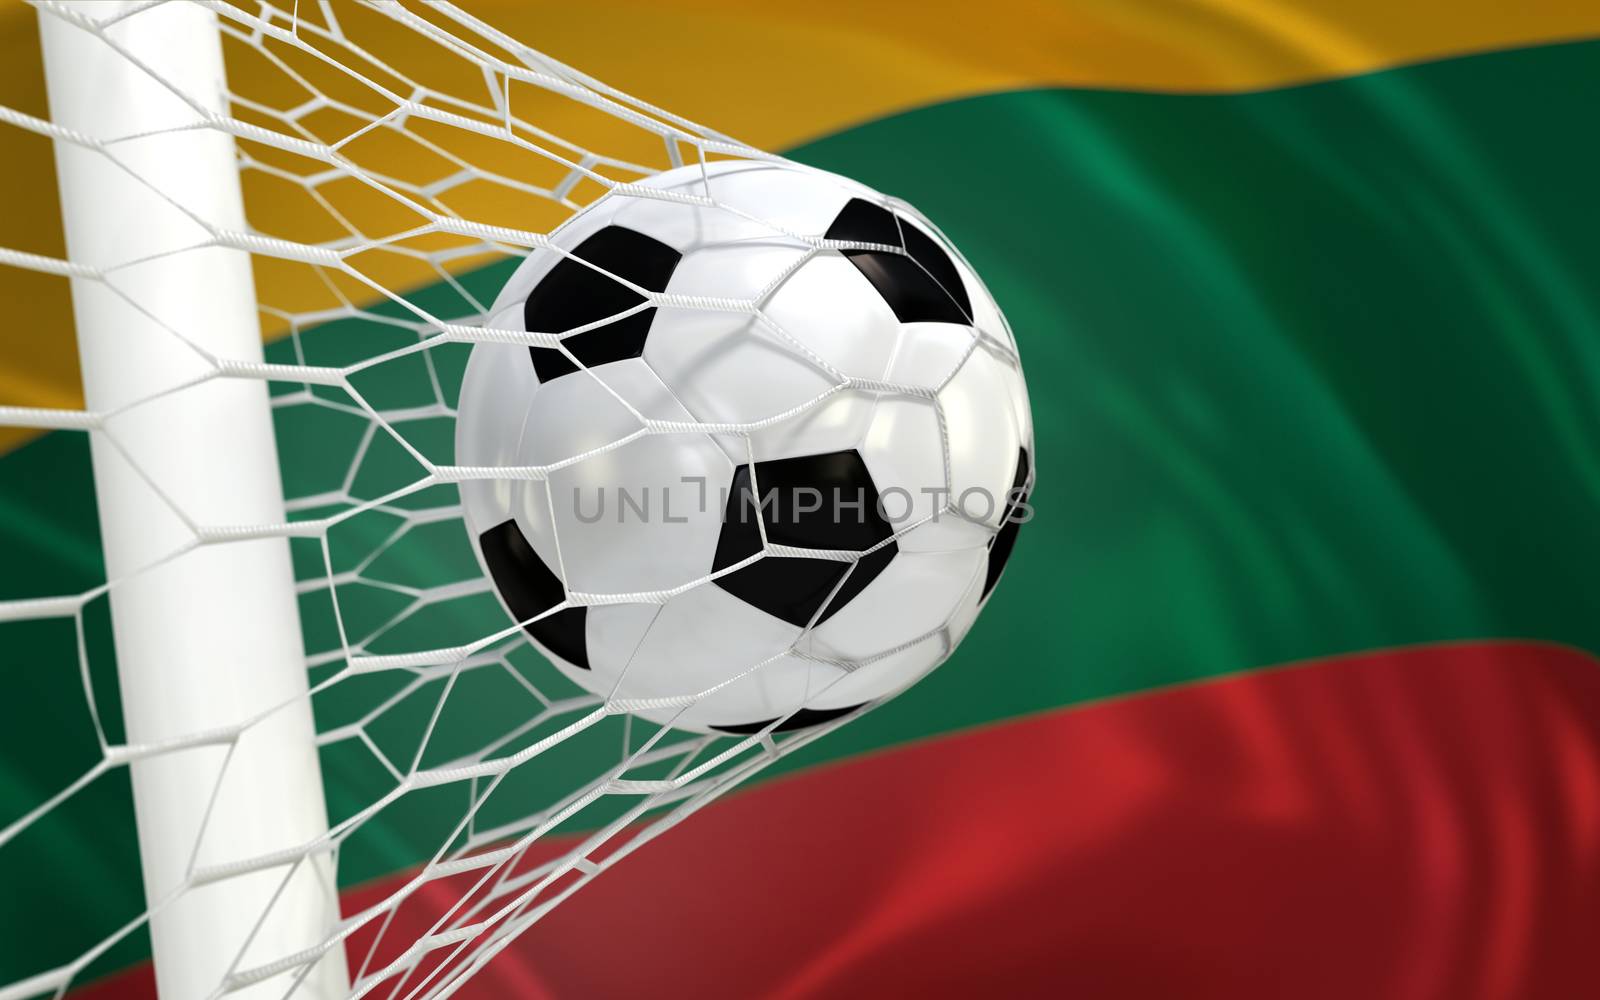 Lithuania flag and soccer ball, football in goal net